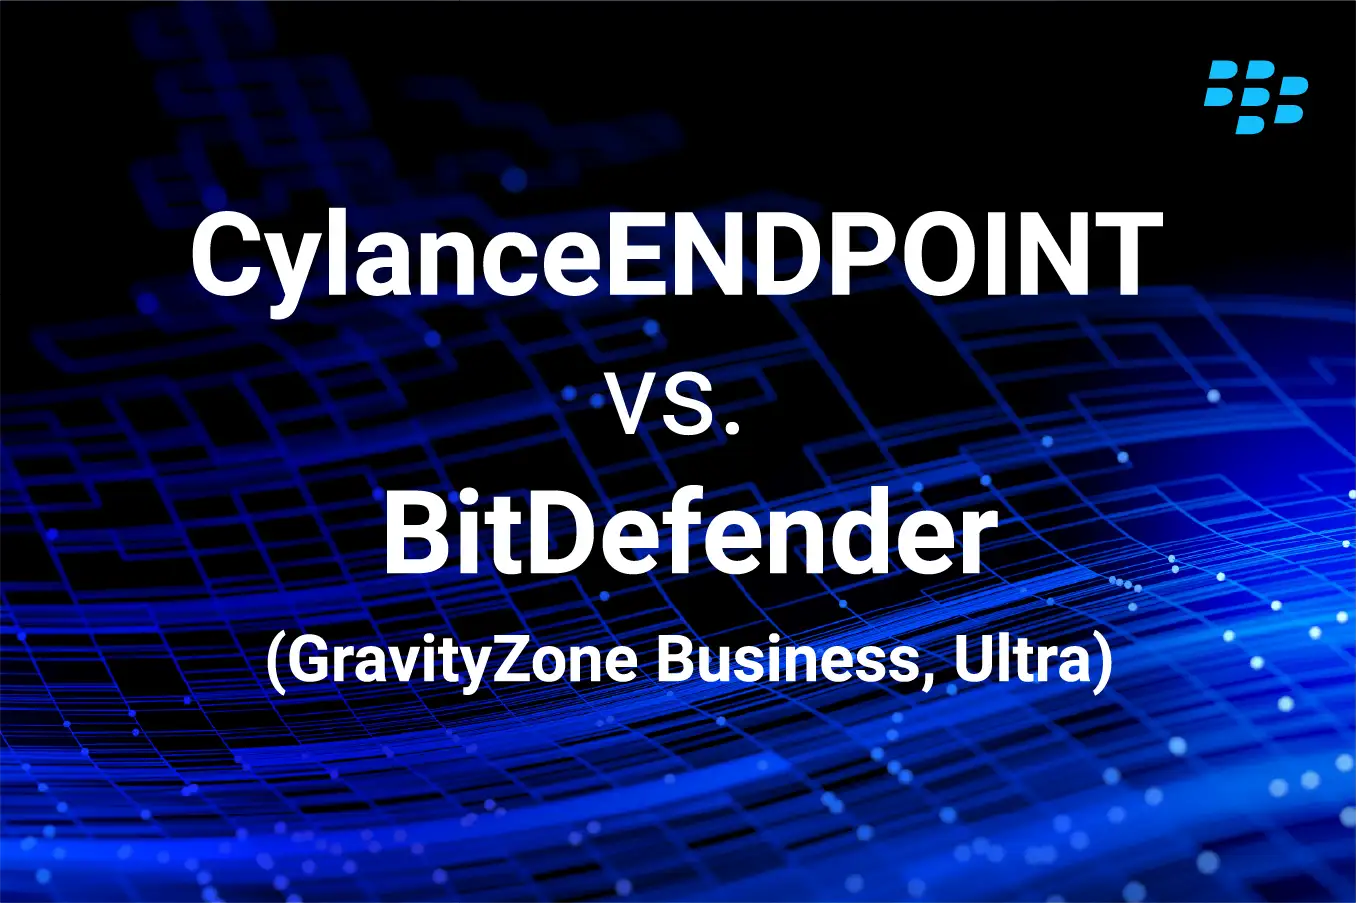 CylanceENDPOINT vs. BitDefender (GravityZone Business, Ultra)